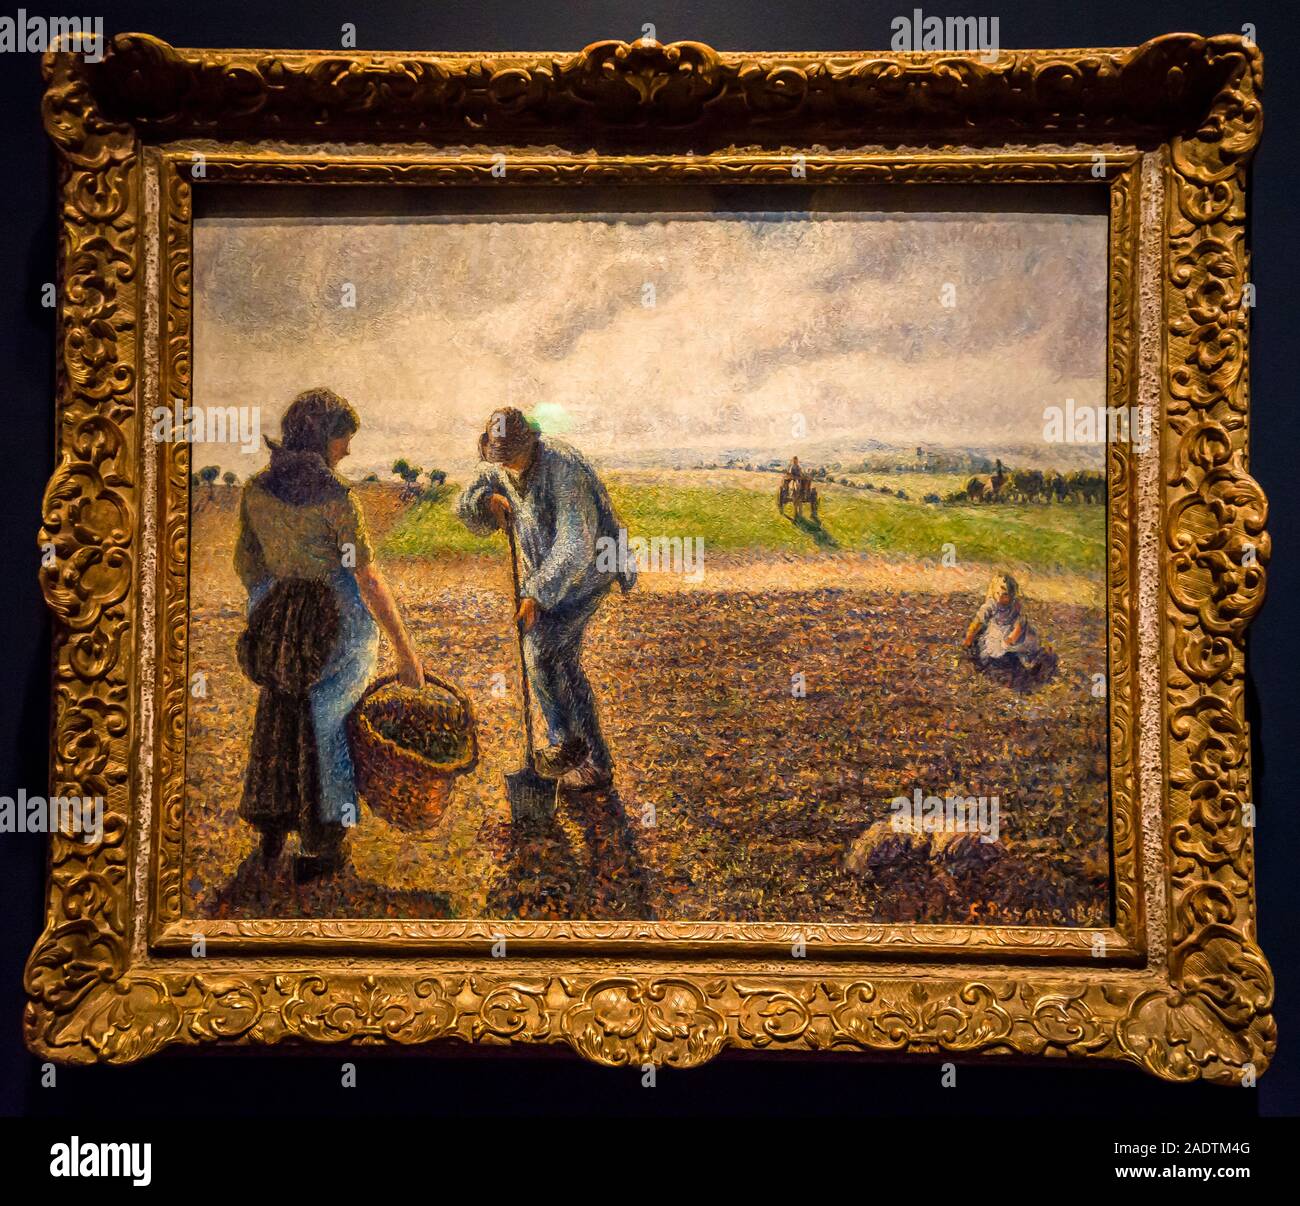 Camille Pissarro painting Peasants in the field, Detroit Institute of Arts, (DIA), Detroit, Michigan, USA Stock Photo